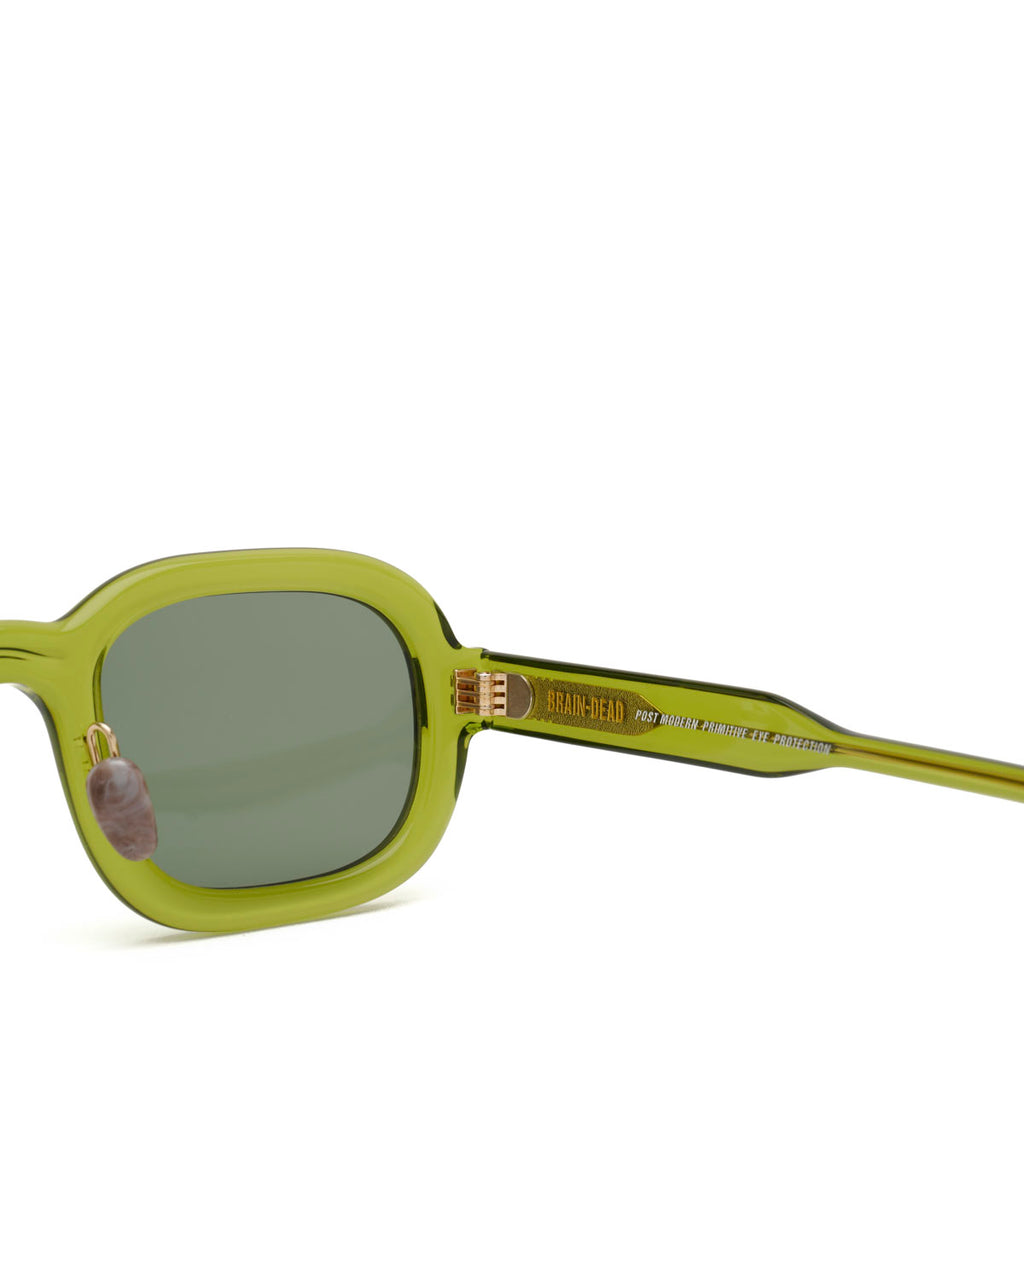 Newman Sunglasses, Green